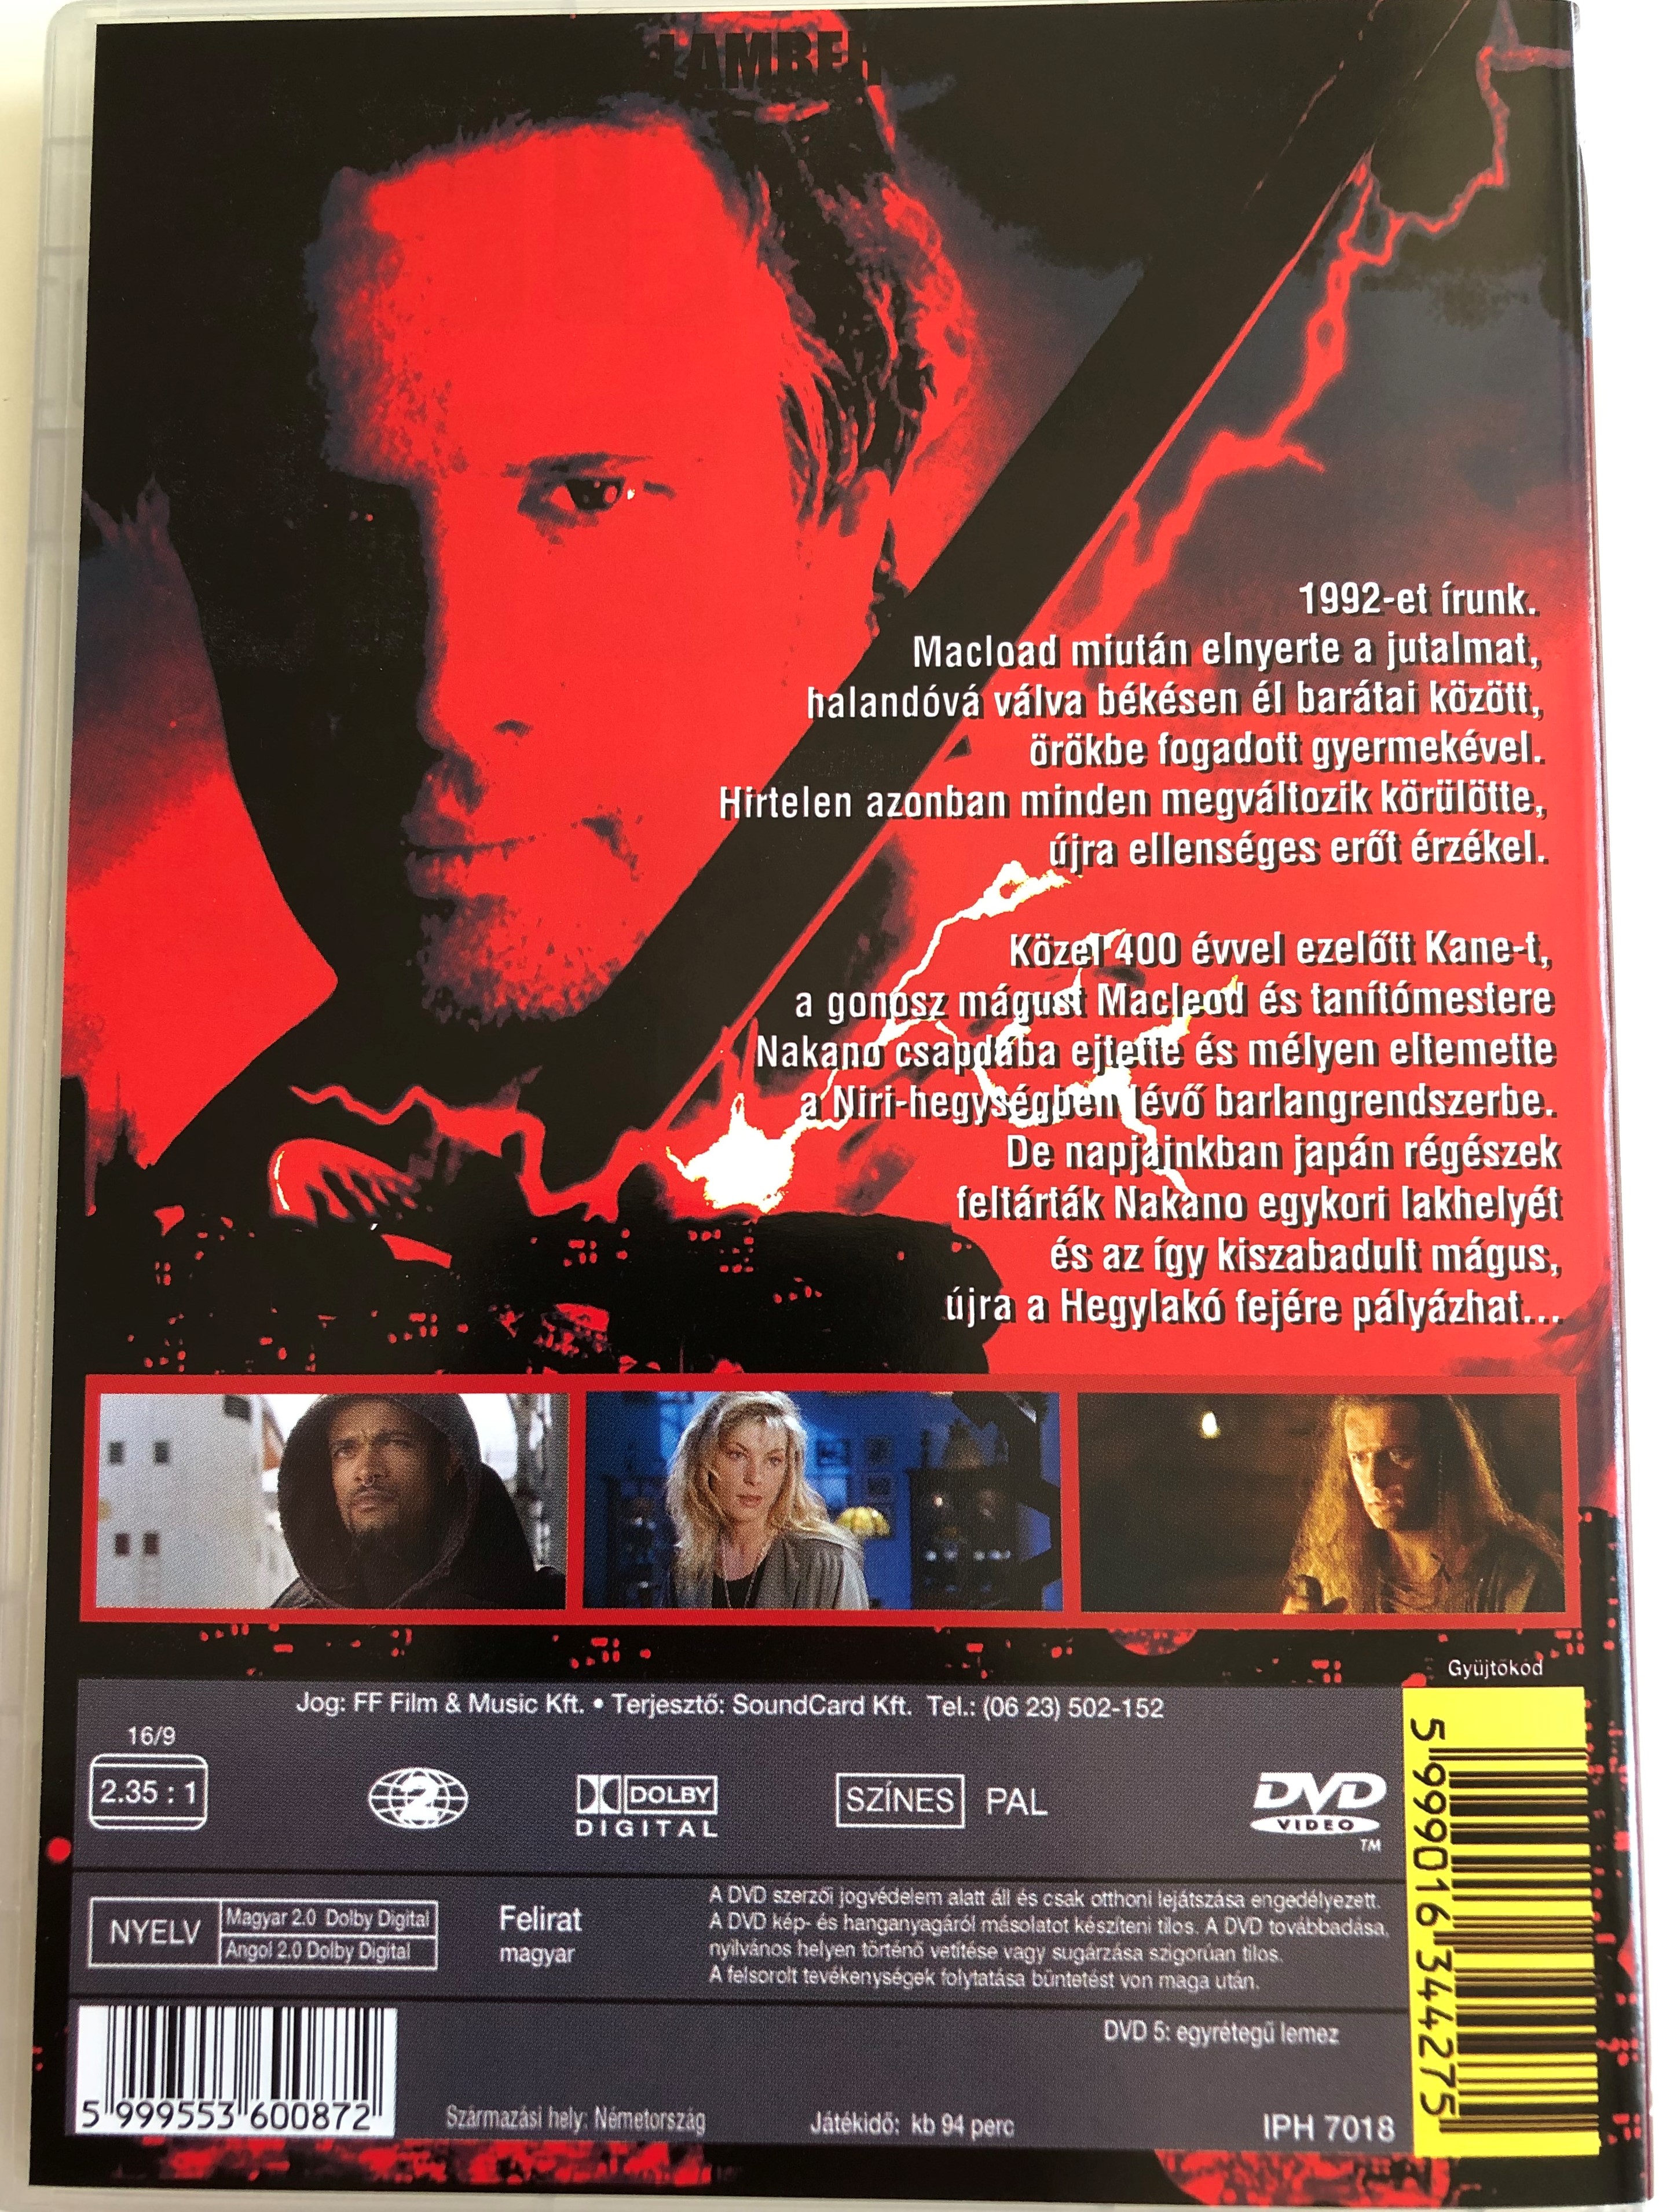 highlander-iii-the-sorcerer-dvd-1994-hegylak-3.-a-m-gus-directed-by-andrew-morahan-starring-christopher-lambert-mario-van-peebles-deborah-unger-hungarian-voiceover-and-subtitles-2-.jpg